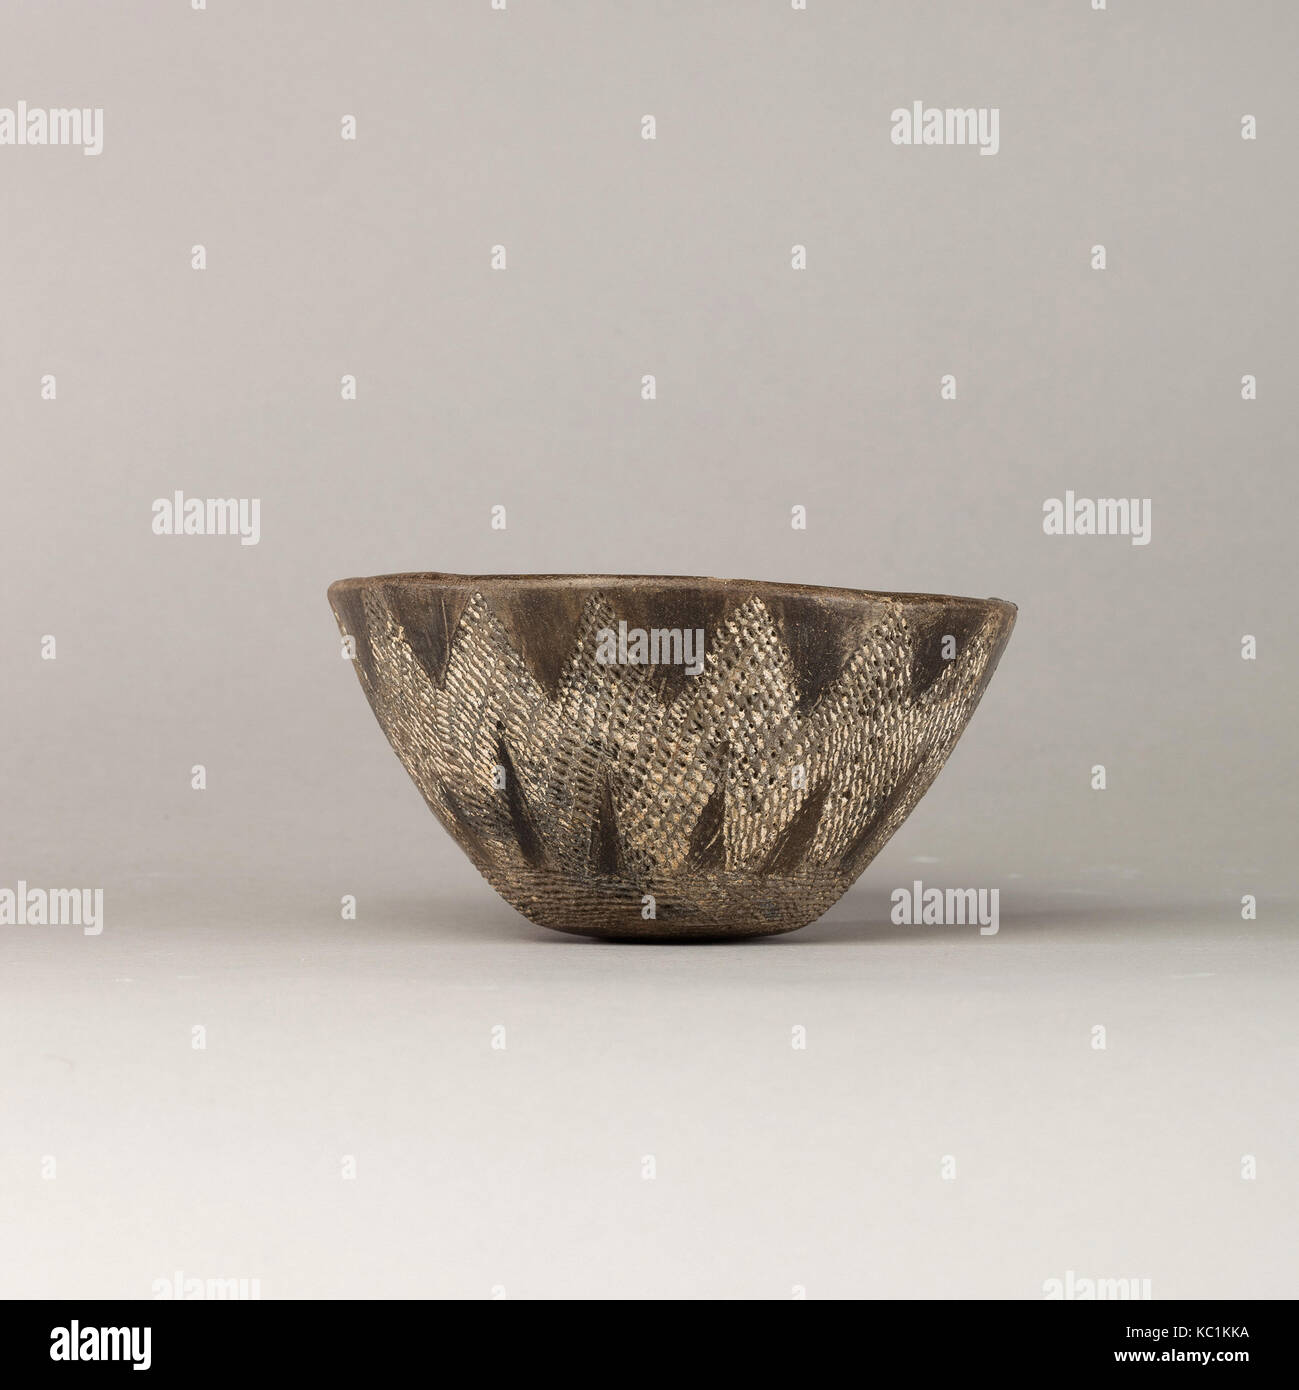 Celestial Black Bear Ceramic Mixing Bowl Set in Bronze